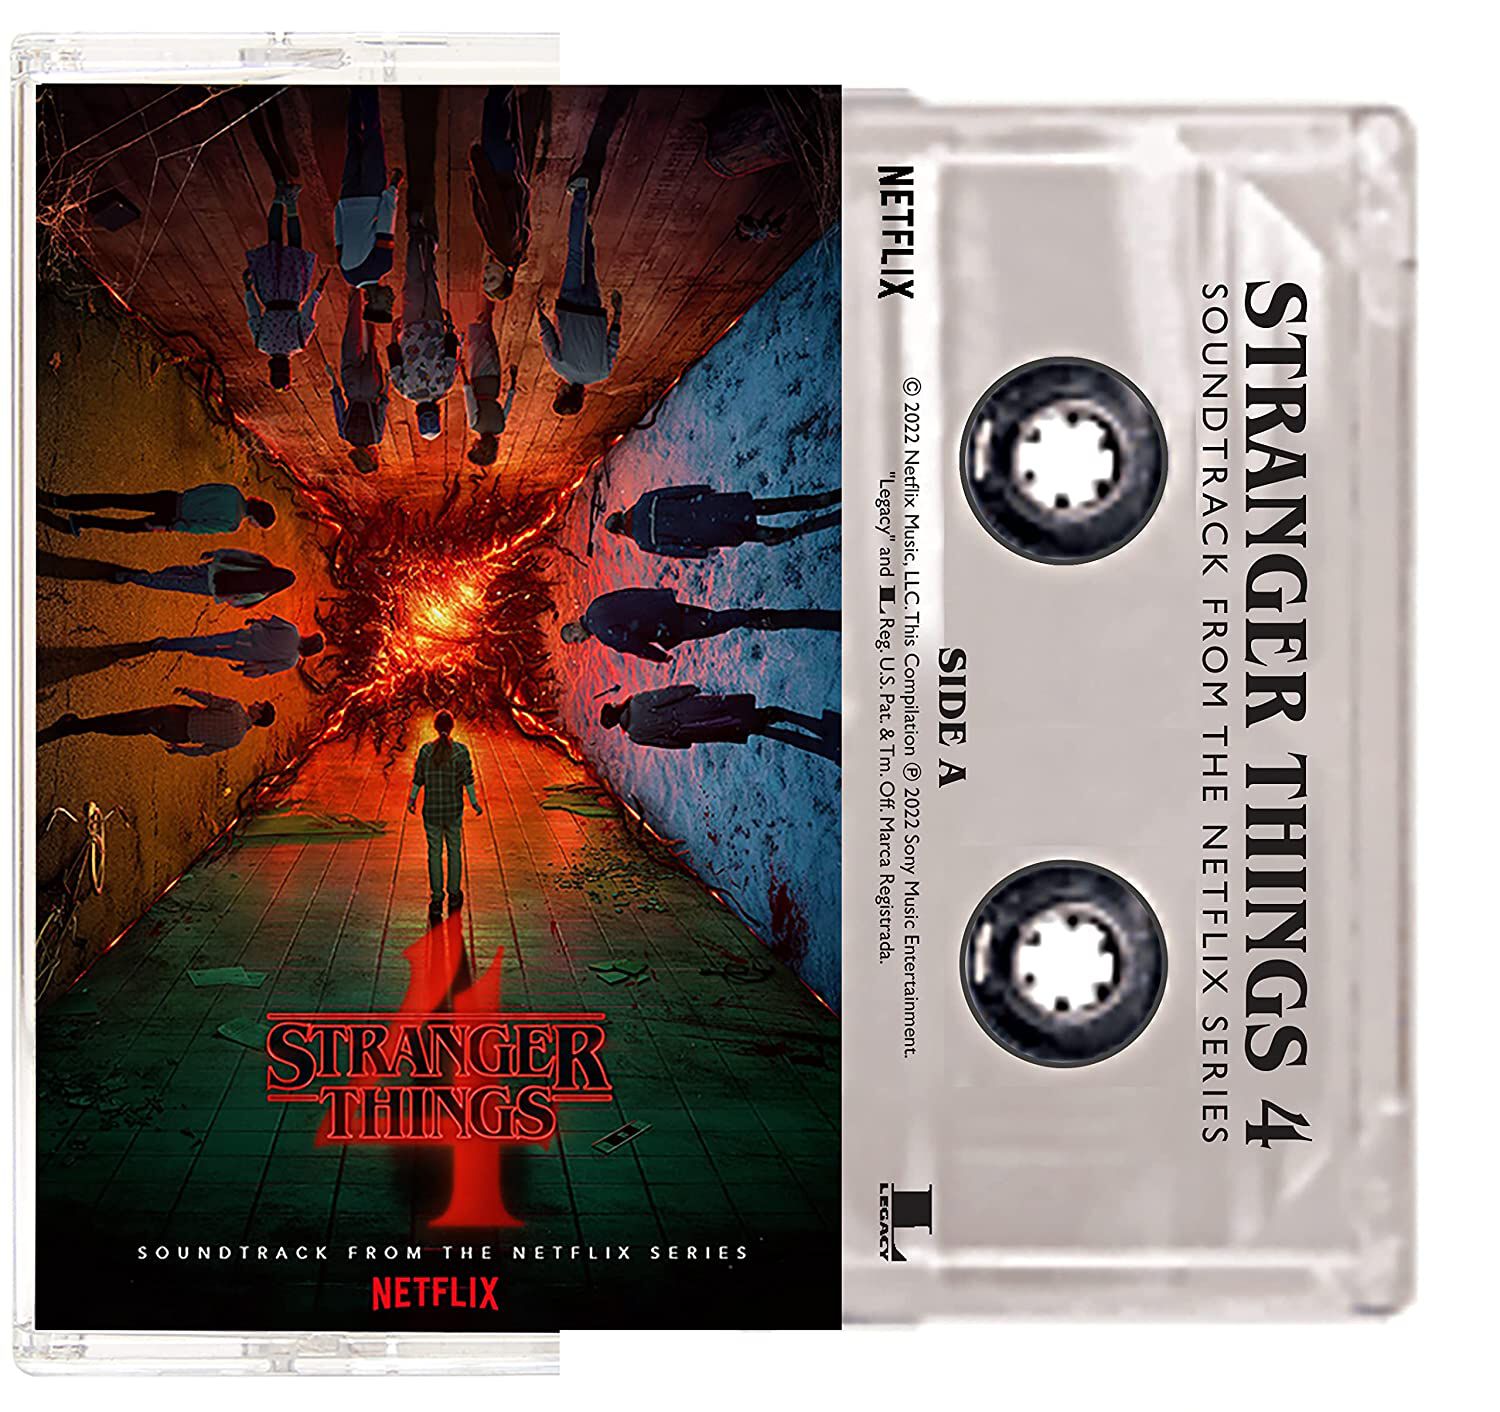 Stranger Things - Stranger Things: Soundtrack from the Netflix Series - K7 audio - Unisexe - coloré 534715St 196587001544.0